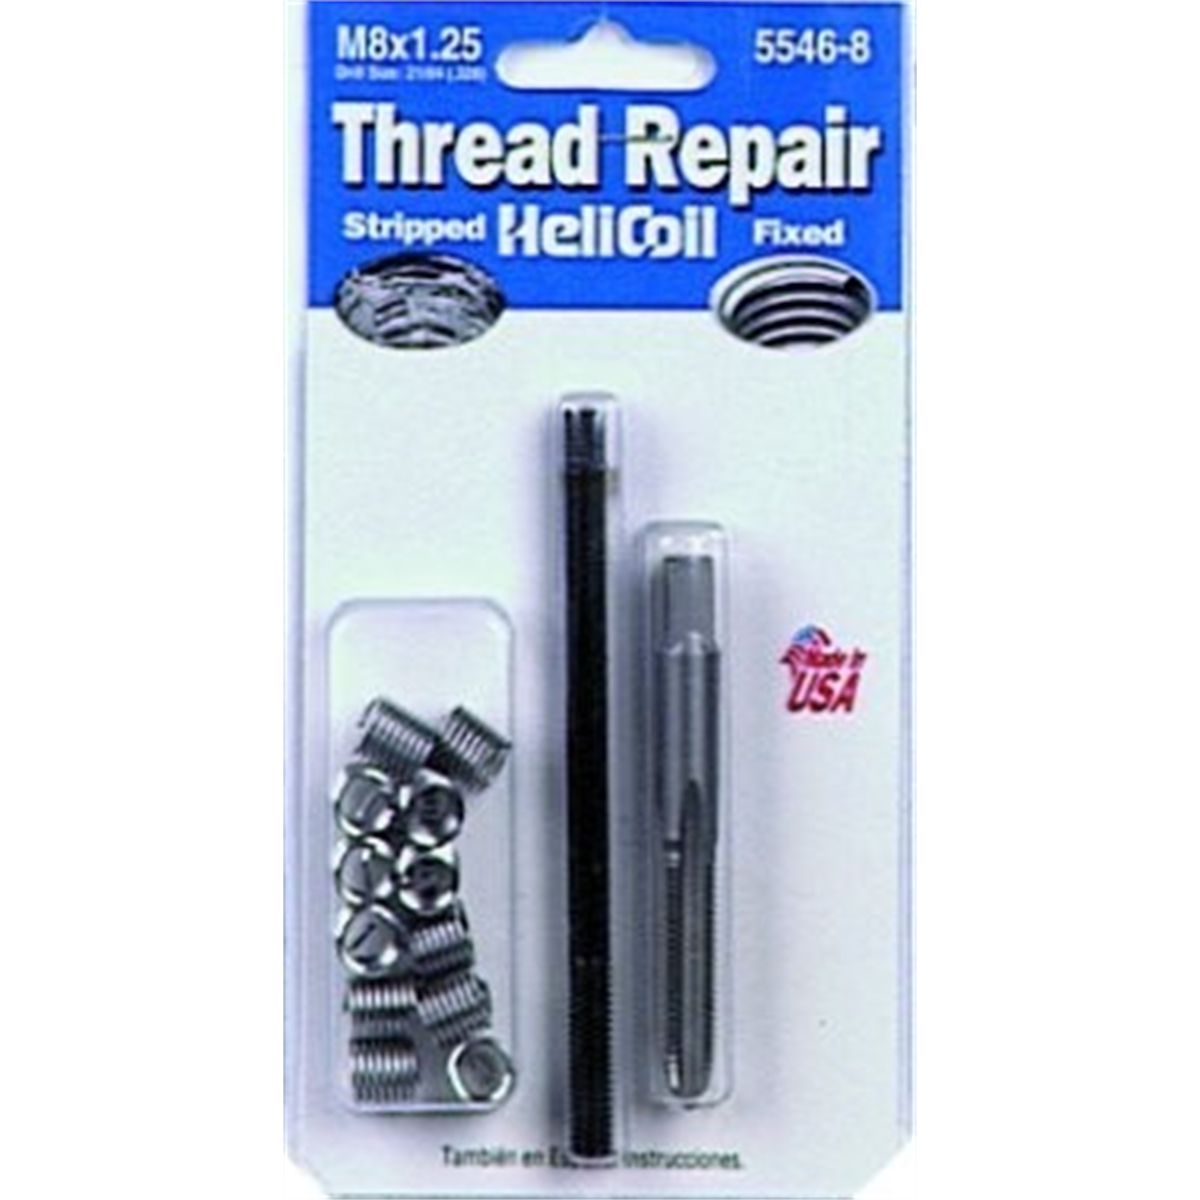 keyzone Gewinde Reparatur Set 30PCS M6 Metric Thread Repair Insert Coil Helicoil Set Automotive Repair Kit